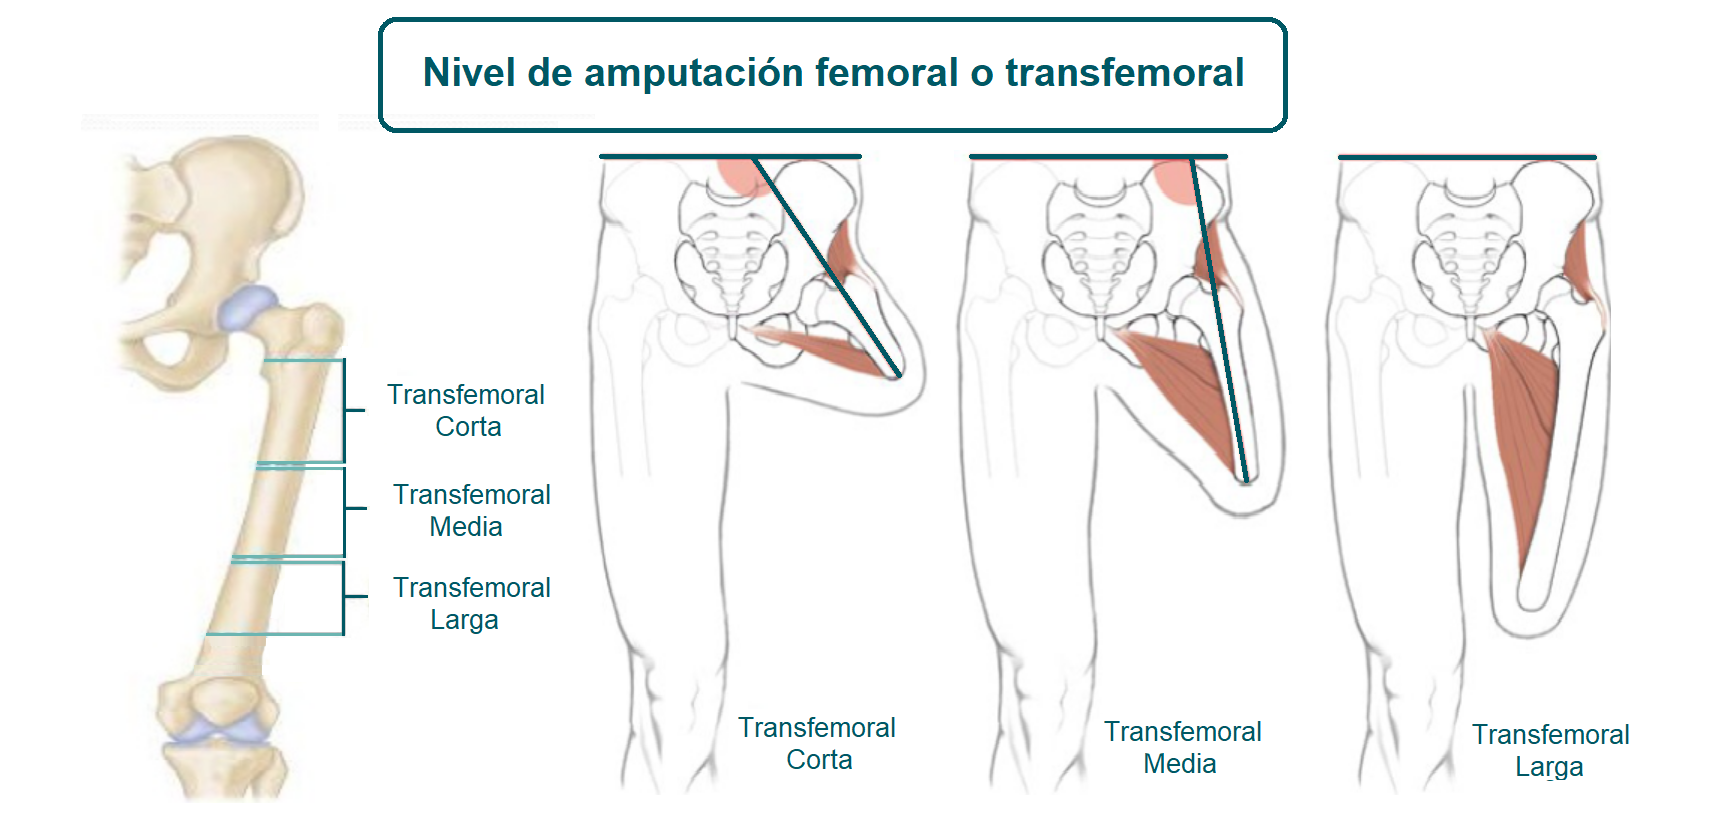 Nivel de amputación femoral o transfemoral